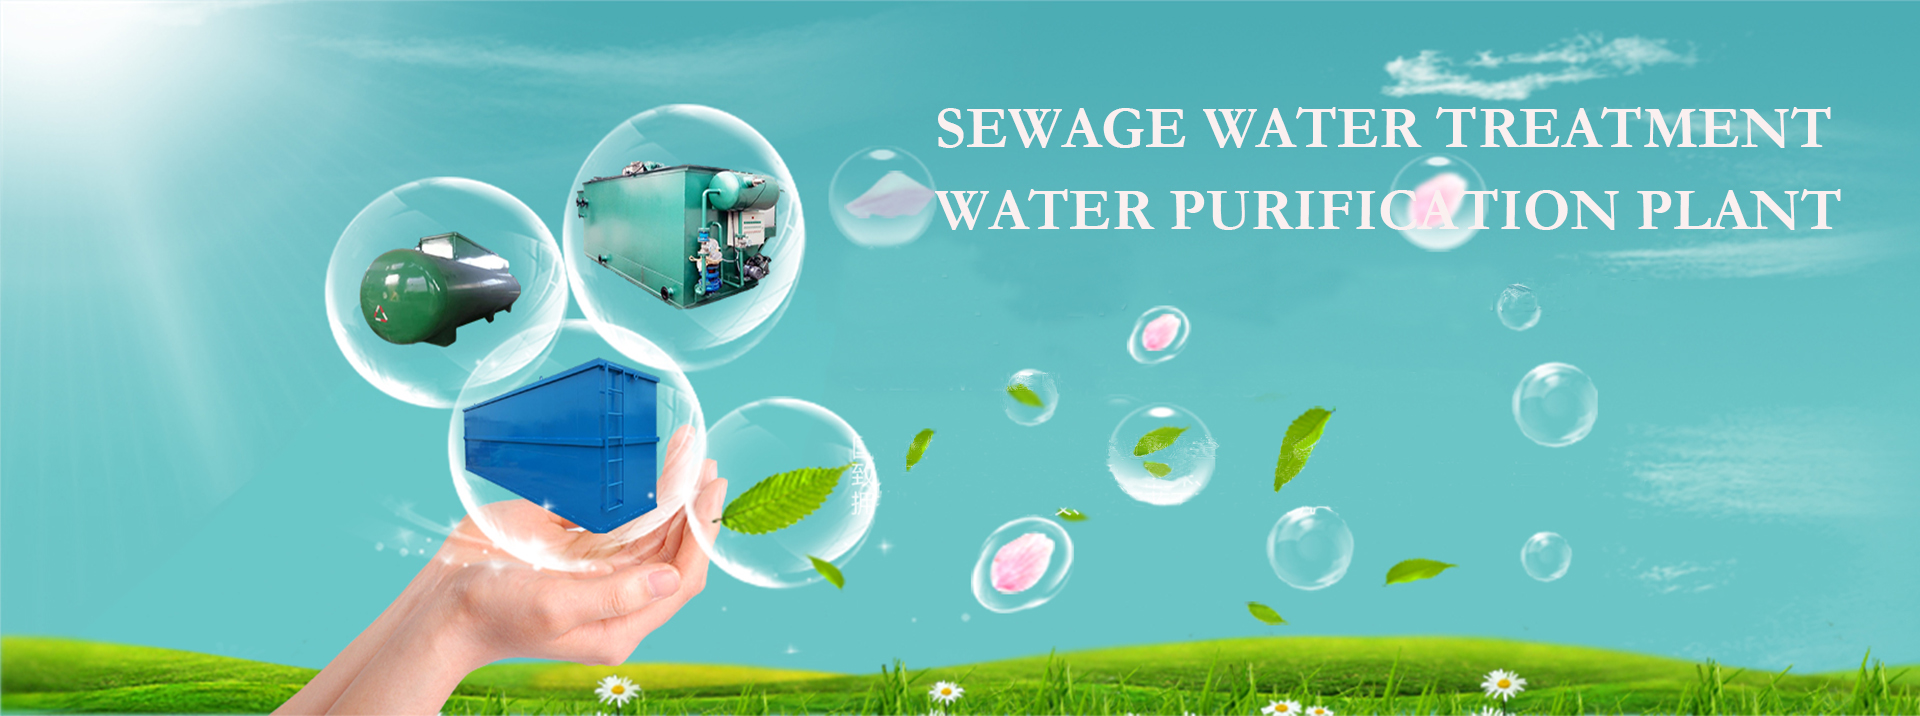 Water Treatment; sewage treatment